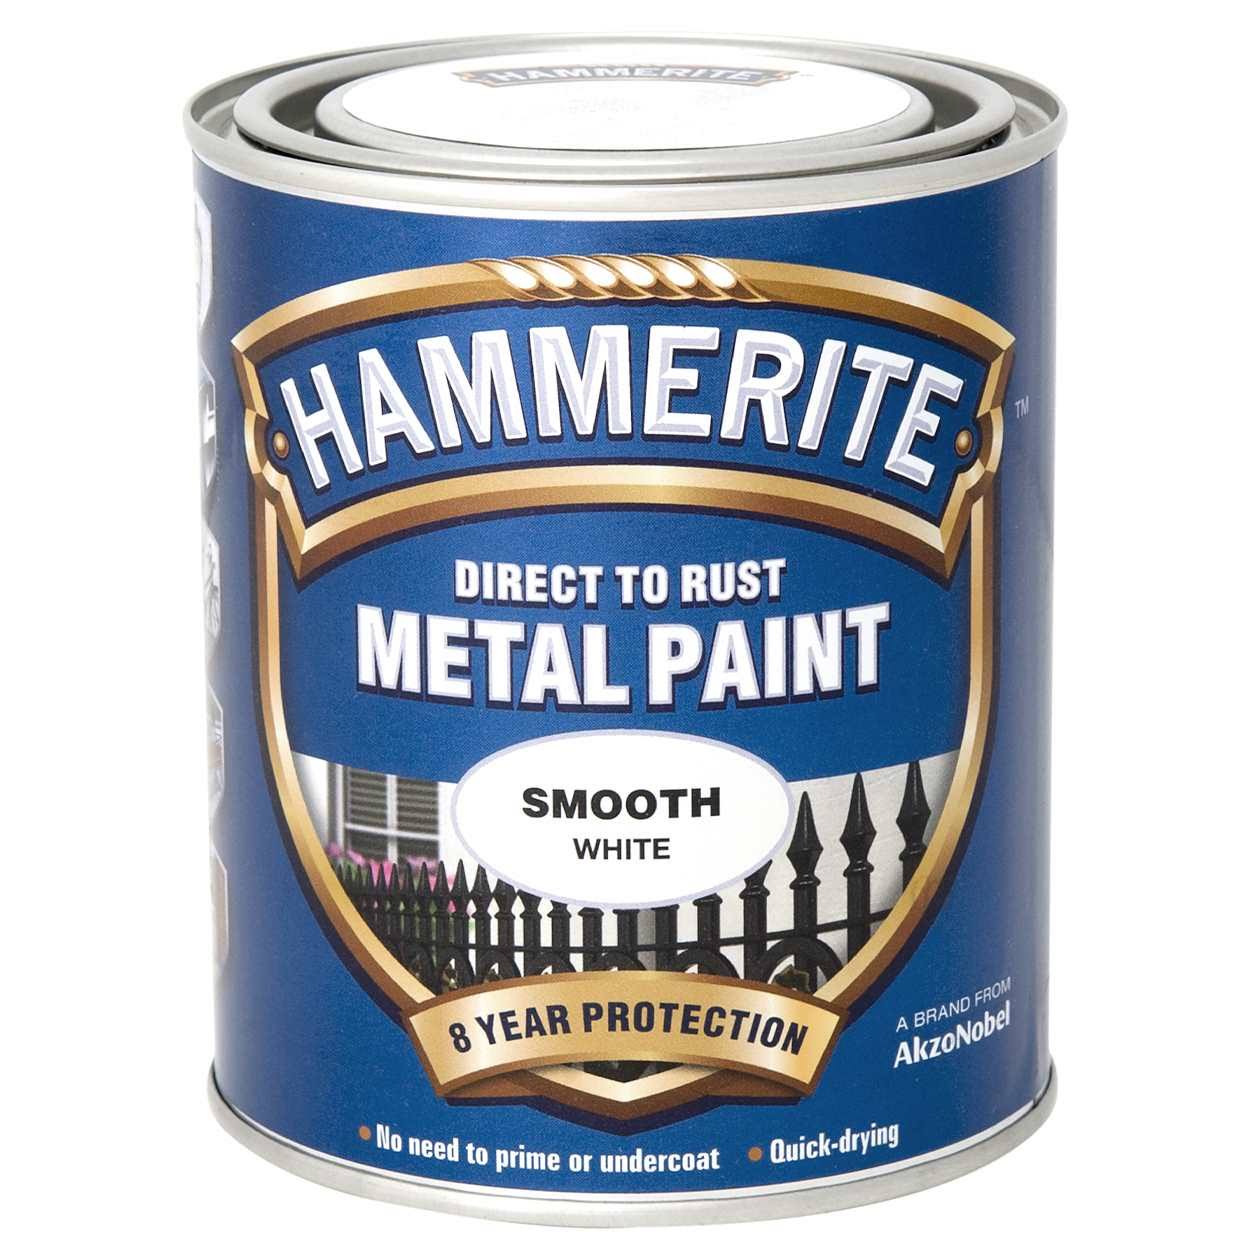 Hammerite Metal Paint - Smooth White